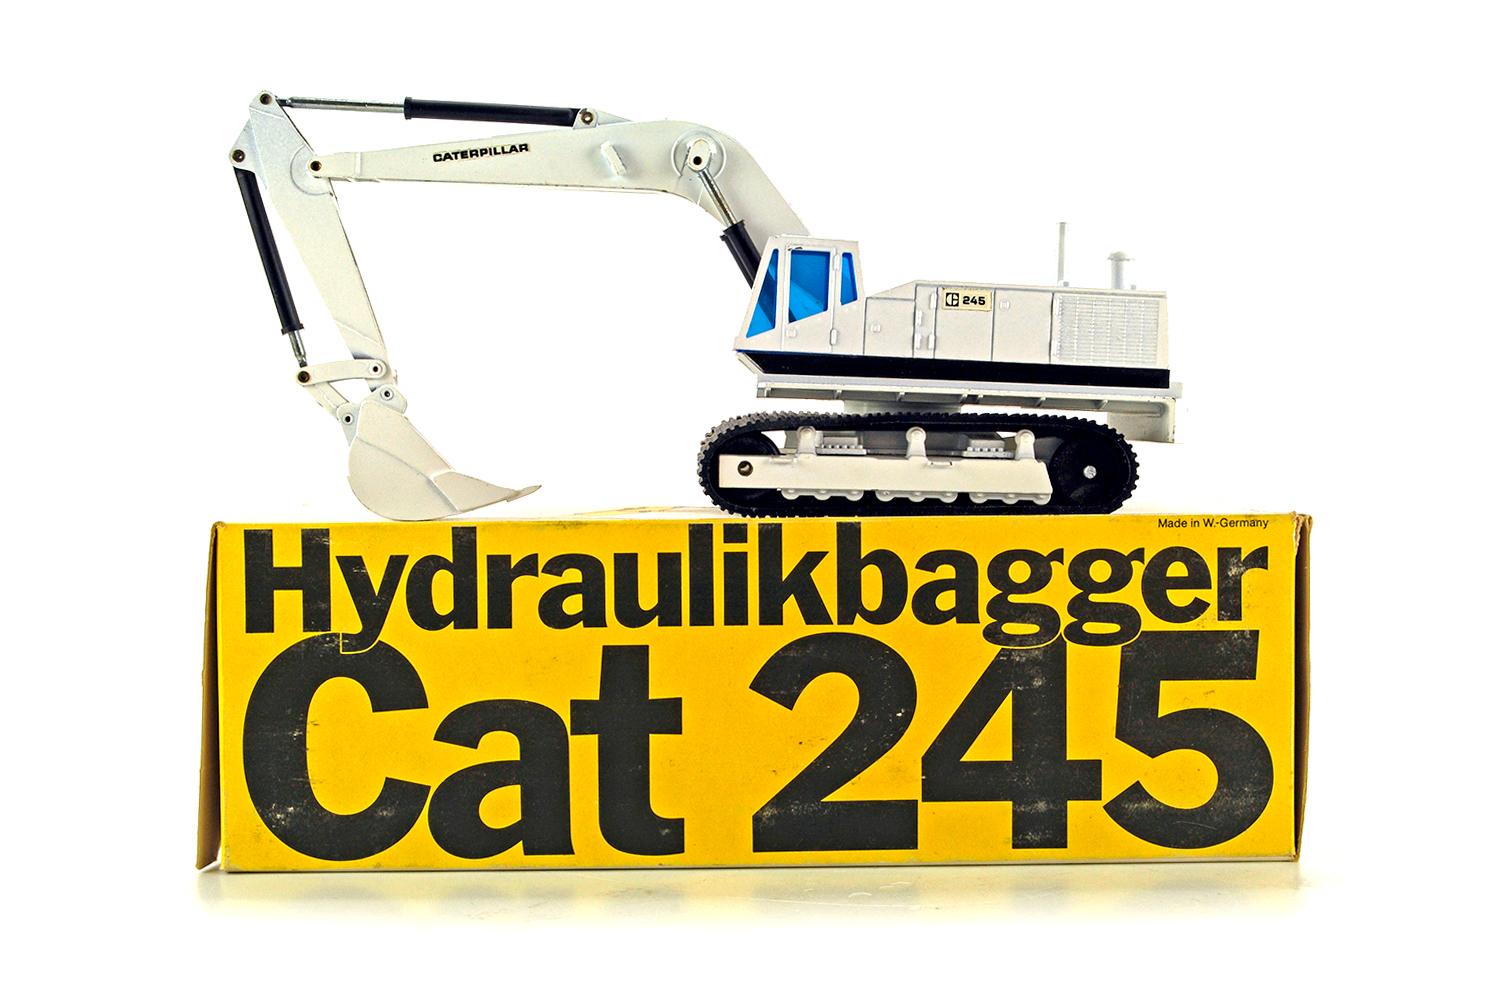 Caterpillar 245 Hydraulic Excavator - White